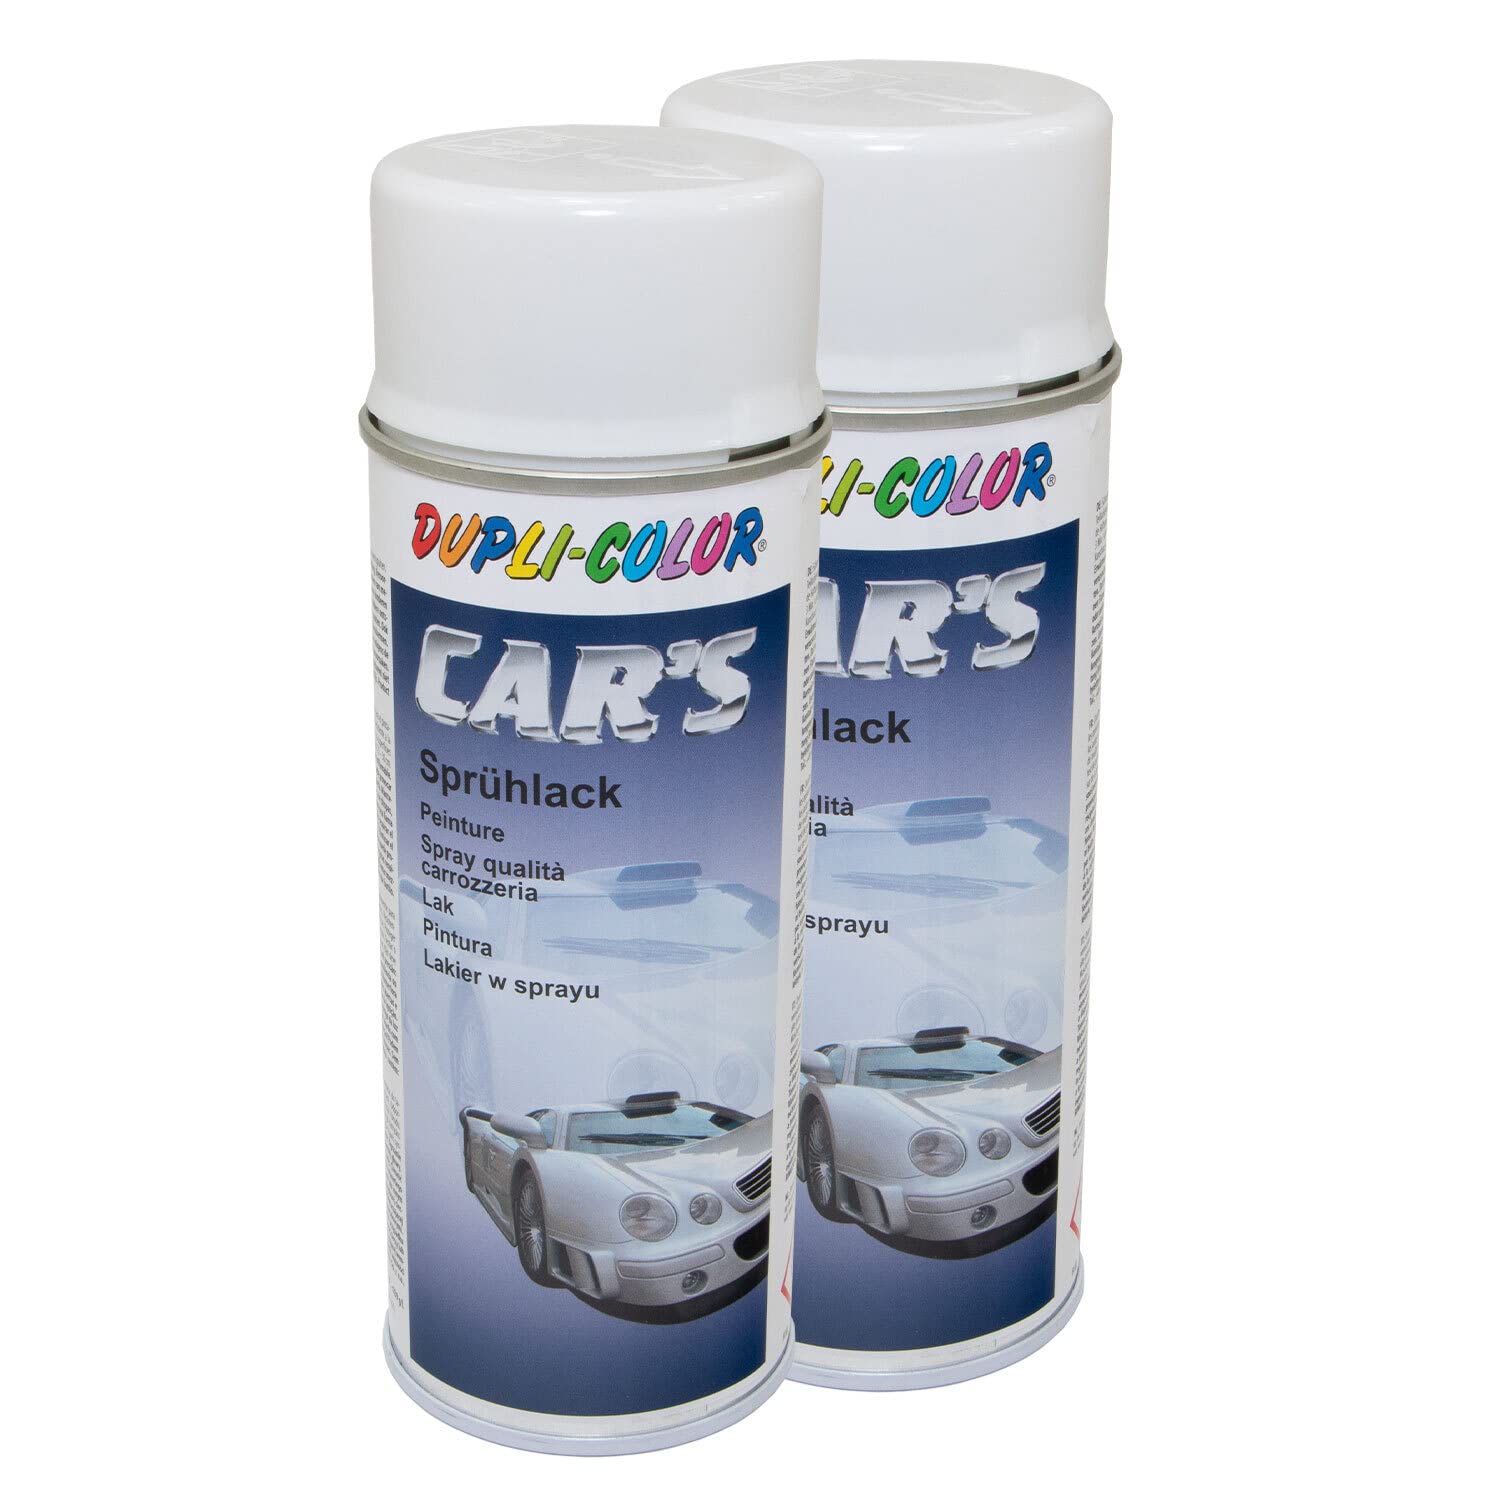 Lackspray Spraydose Sprühlack Cars Dupli Color 652233 weiss seidenmatt 2 X 400 ml von DUPLI_bundle